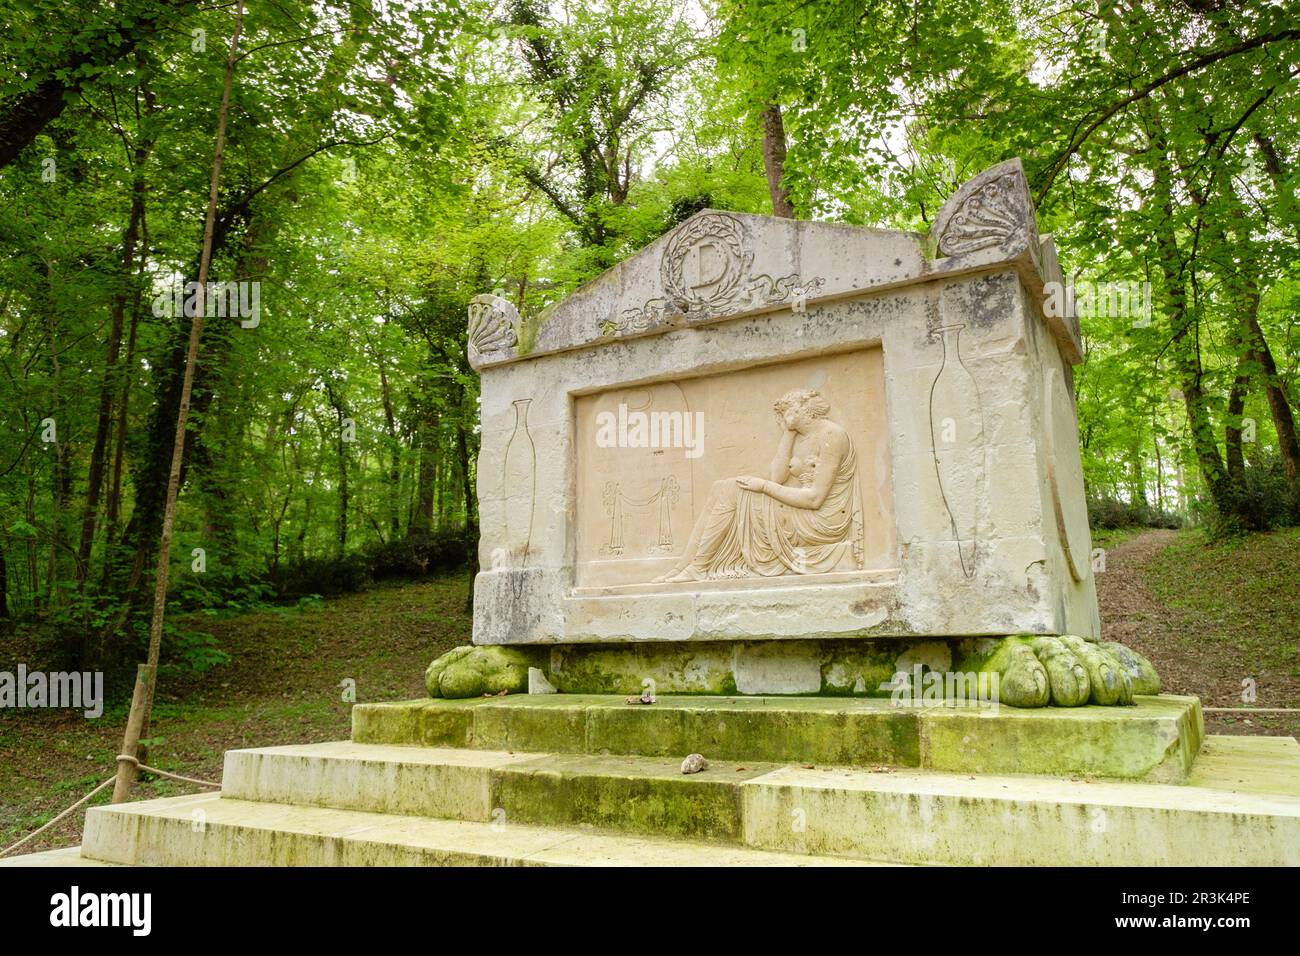 tumba de Luisa de Lorena, castillo de Chenonceau, siglo XVI, Chenonceaux, departamento de Indre y Loira,France,Western Europe. Stock Photo